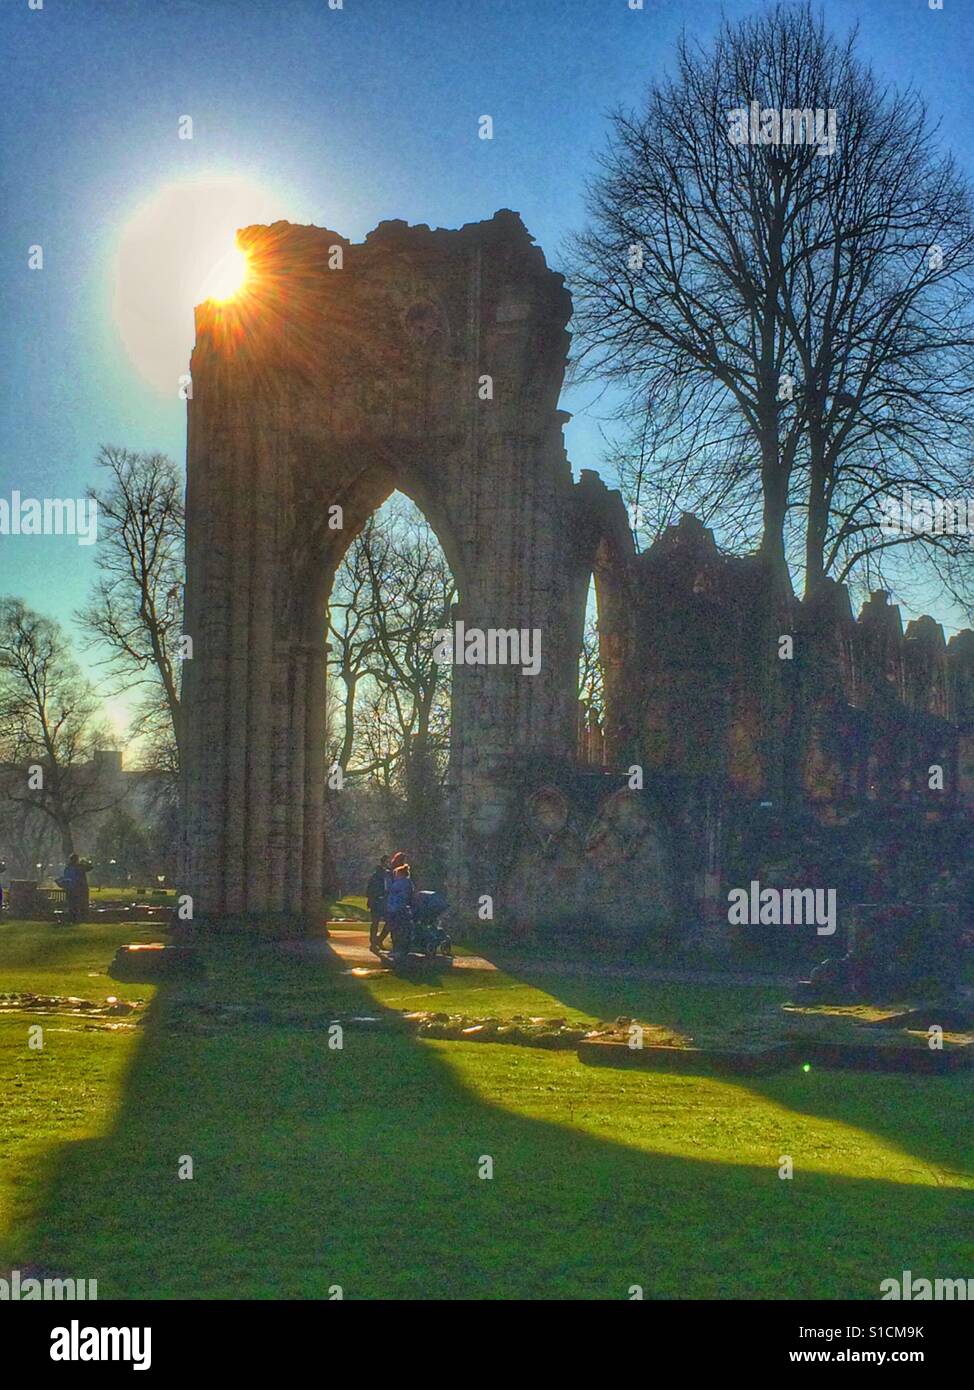 Str. Marys Abbey in Wintersonne York North Yorkshire England UK Stockfoto